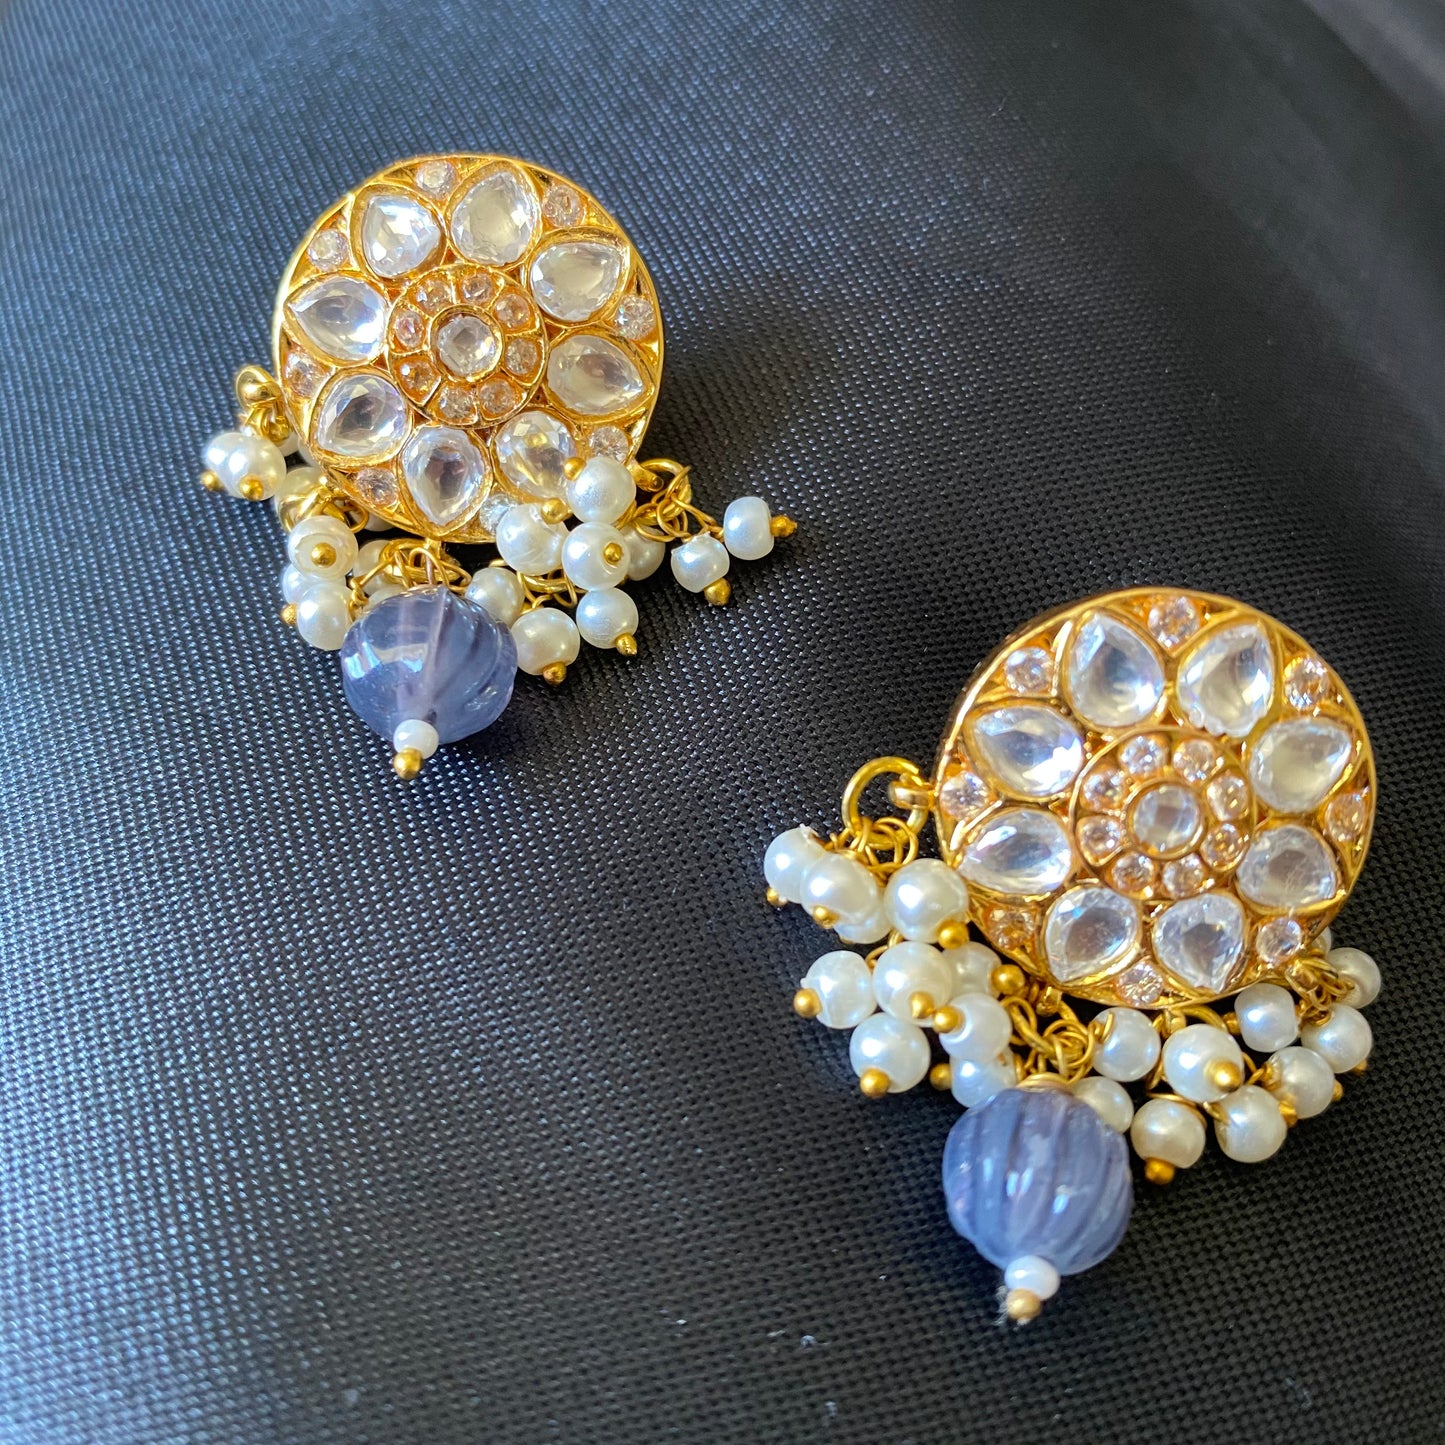 Kundan earrings | Indian earrings | Bollywood earrings